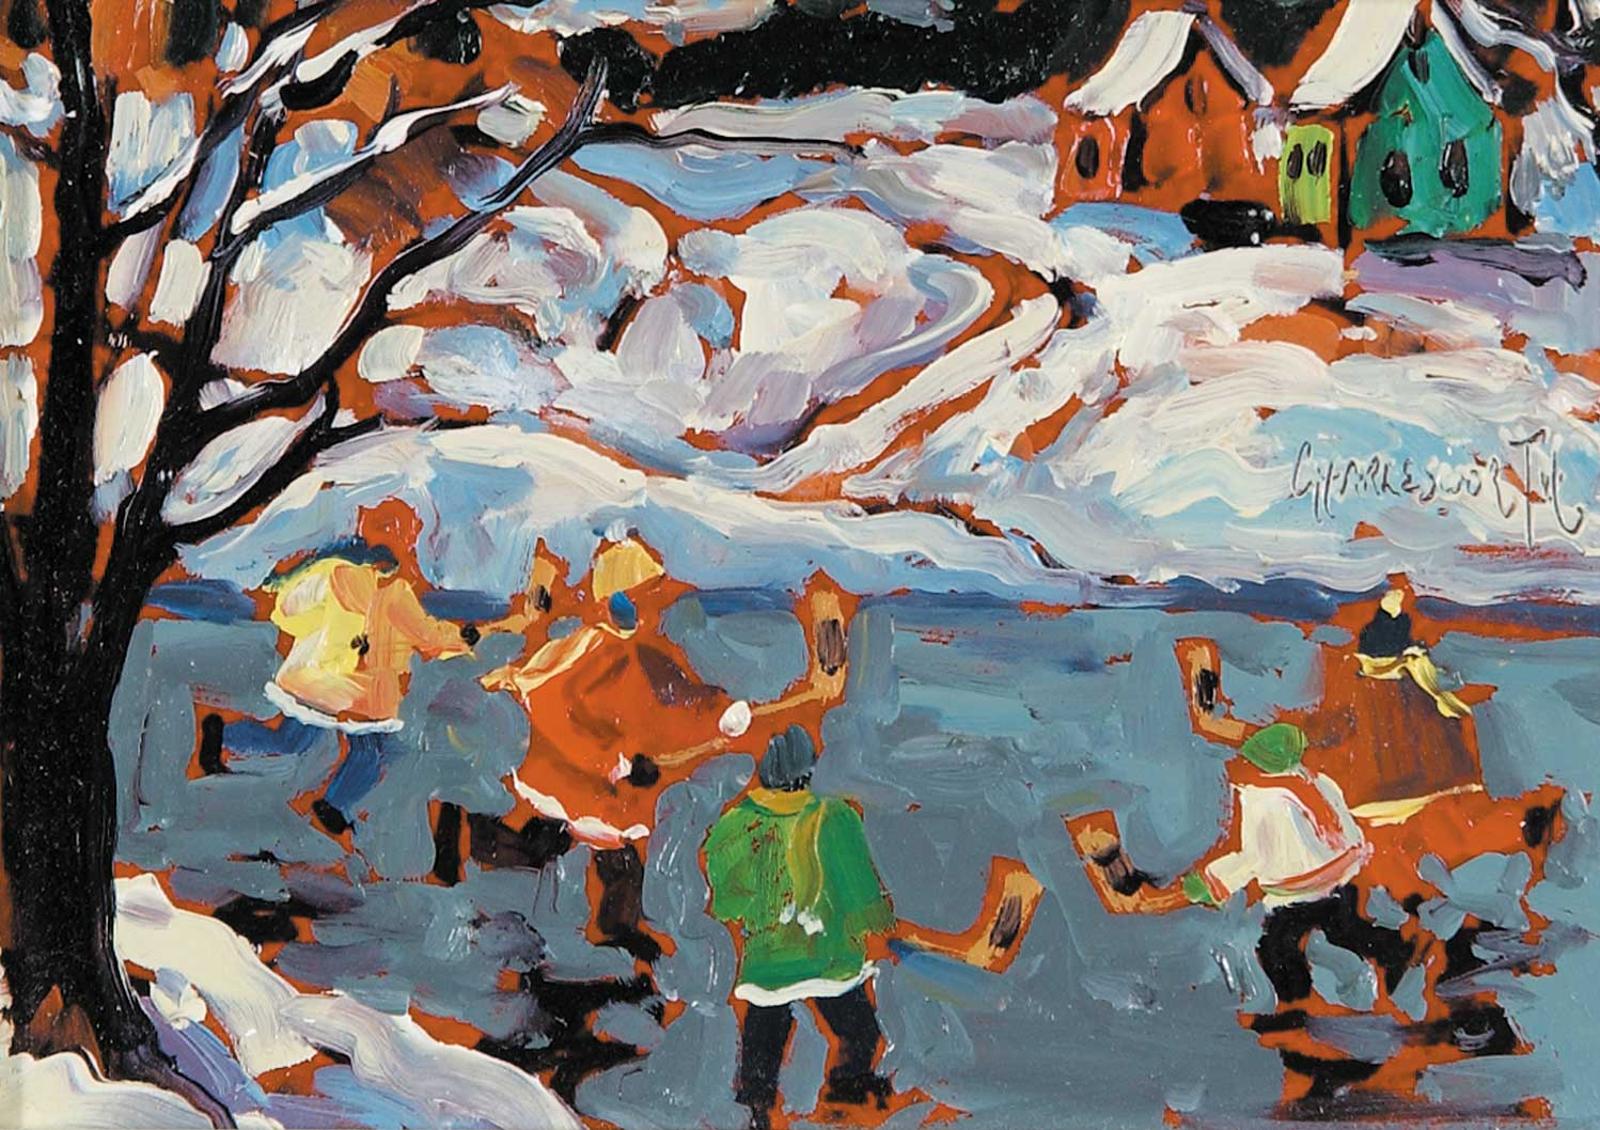 Rod Charlesworth (1955) - A Winter Day